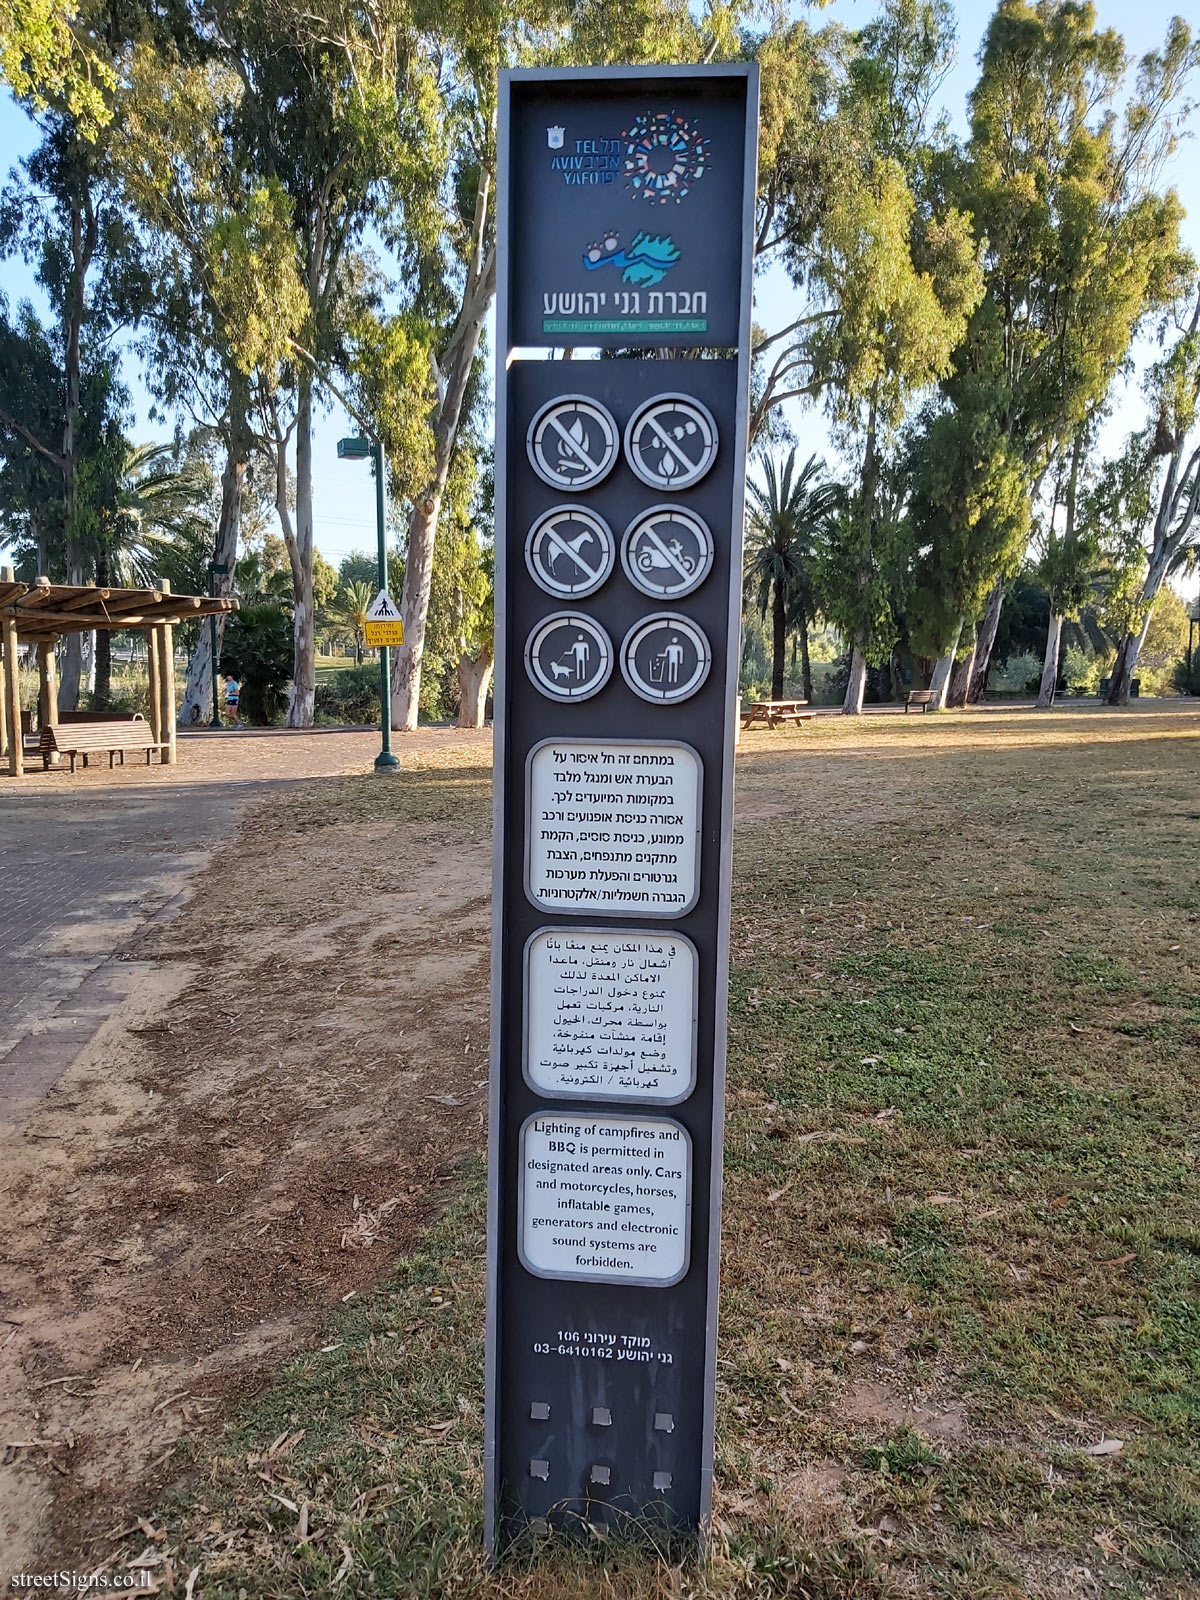 Tel Aviv - Hayarkon Park - A warning sign of the park’s prohibited operations